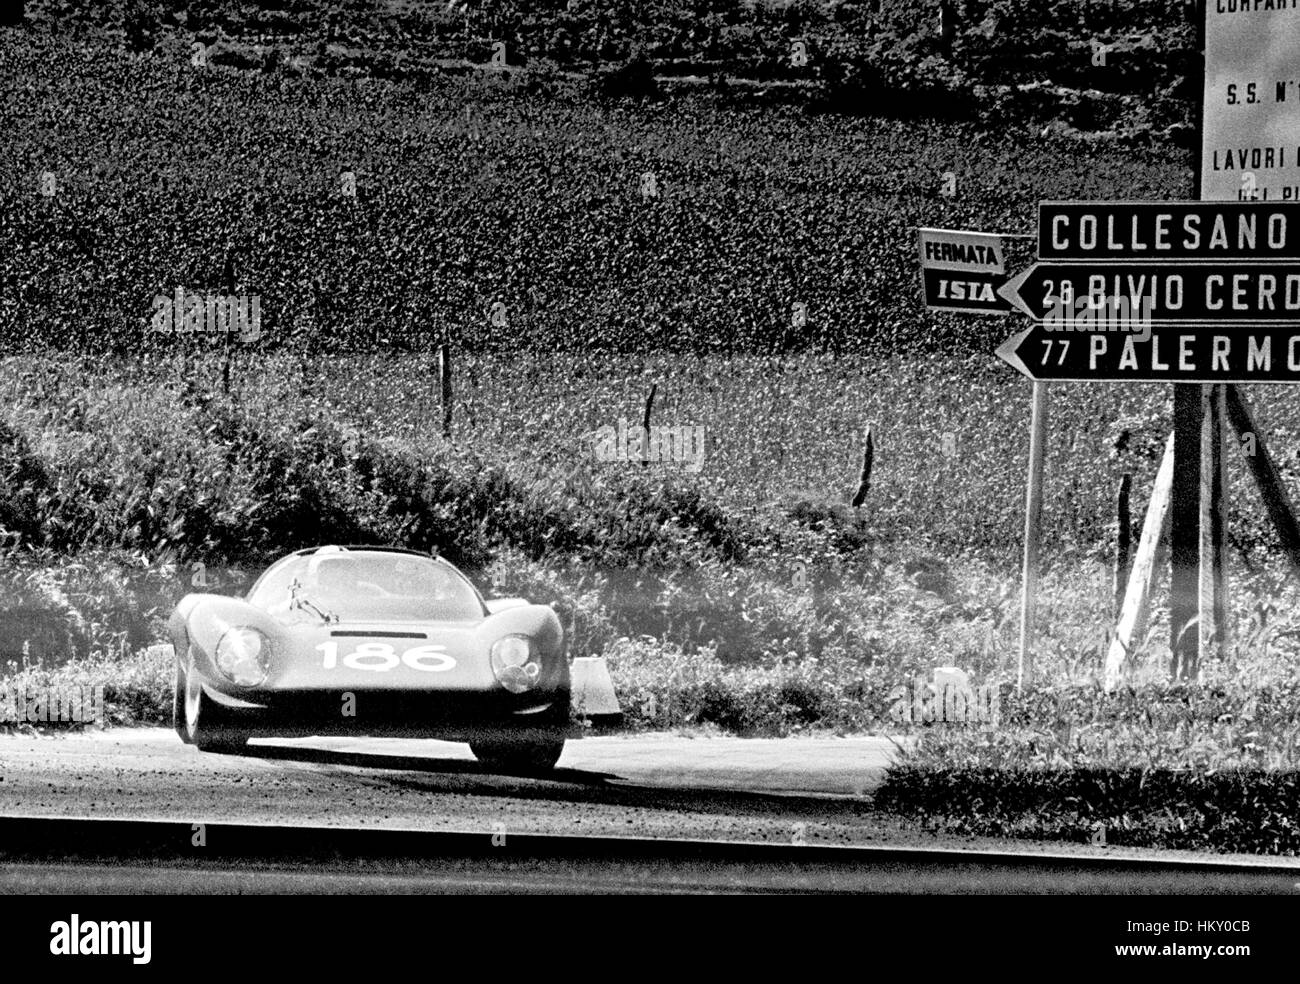 1967 Ferdinando Latteri italiano Dino Ferrari 206S Targa Florio dnf. GG Foto Stock